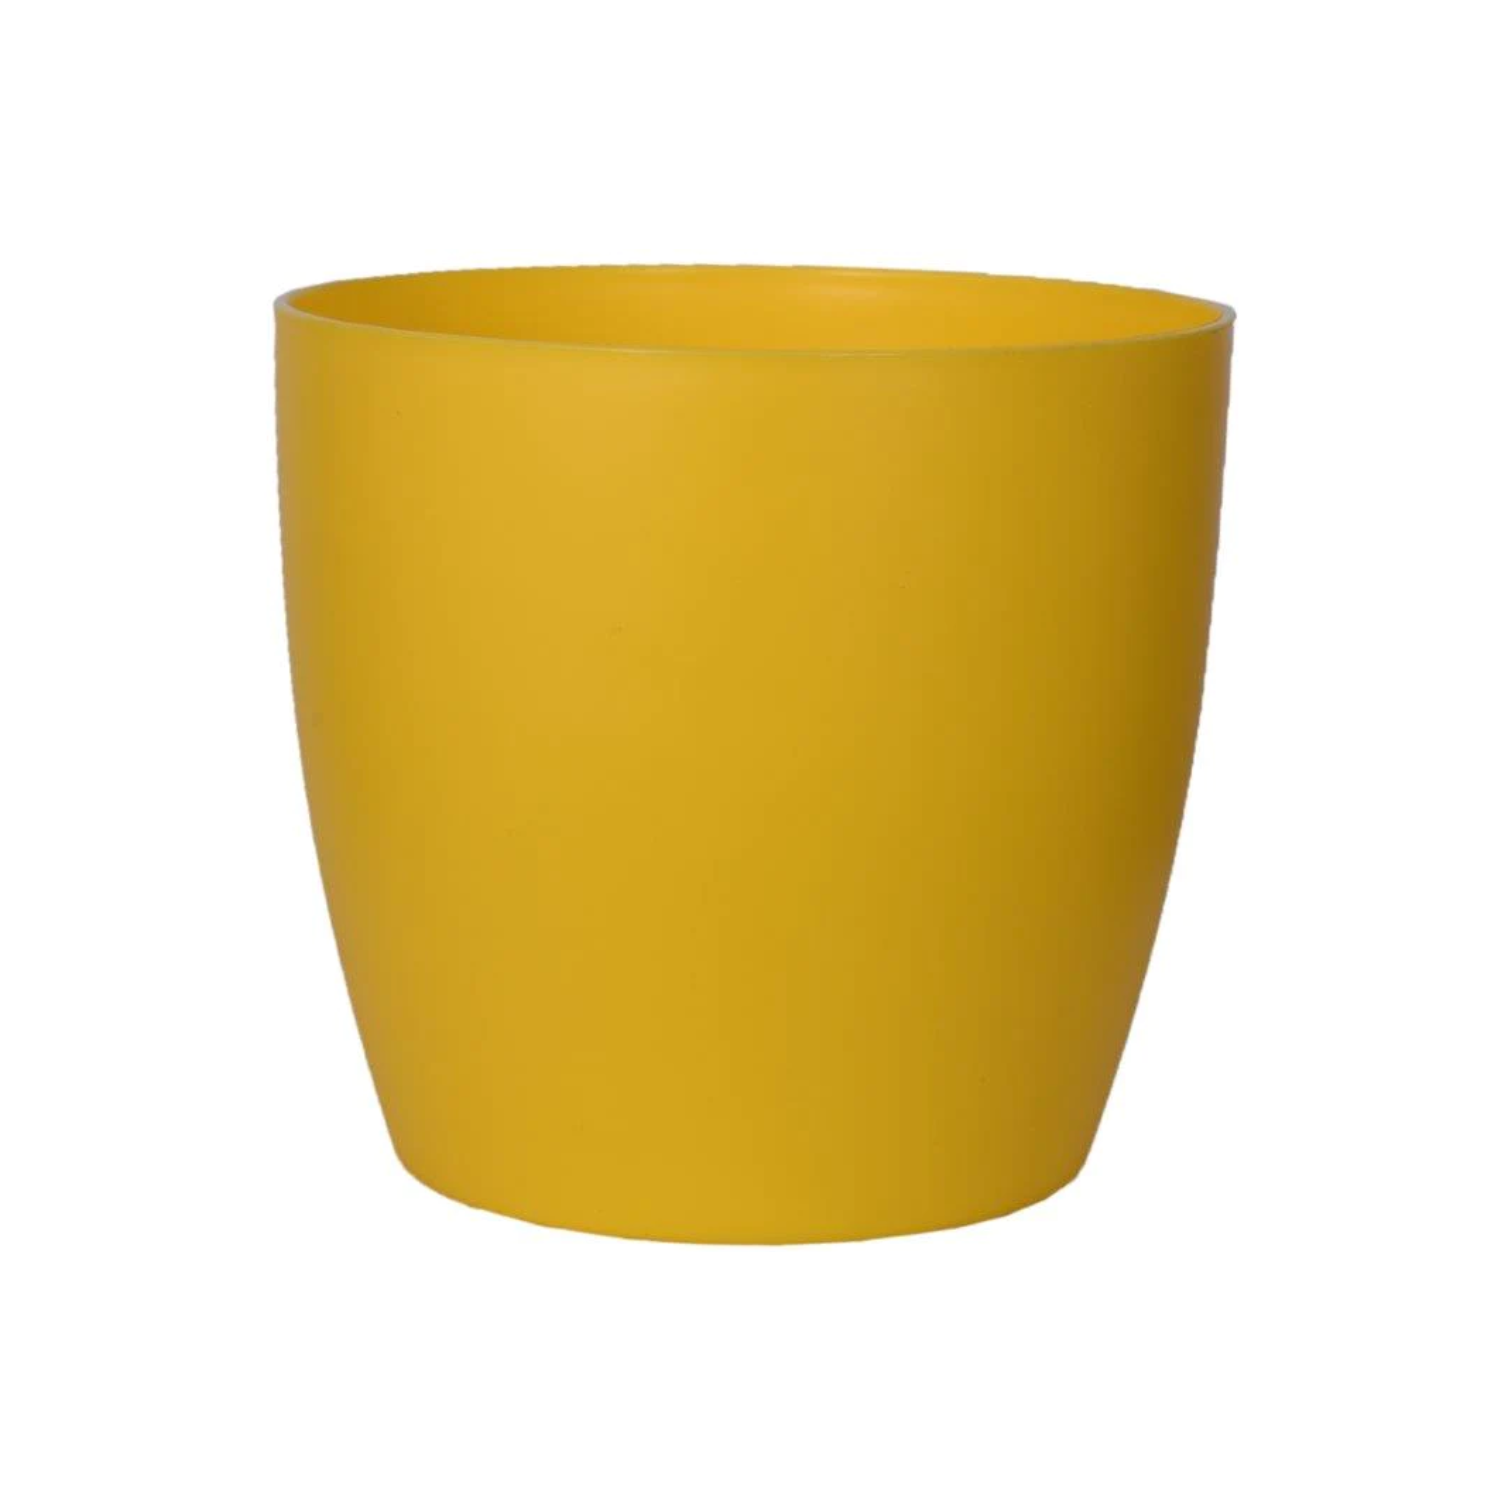 Ronda 1412 Round Plastic Pot (Without Self-Wateriing Kit)